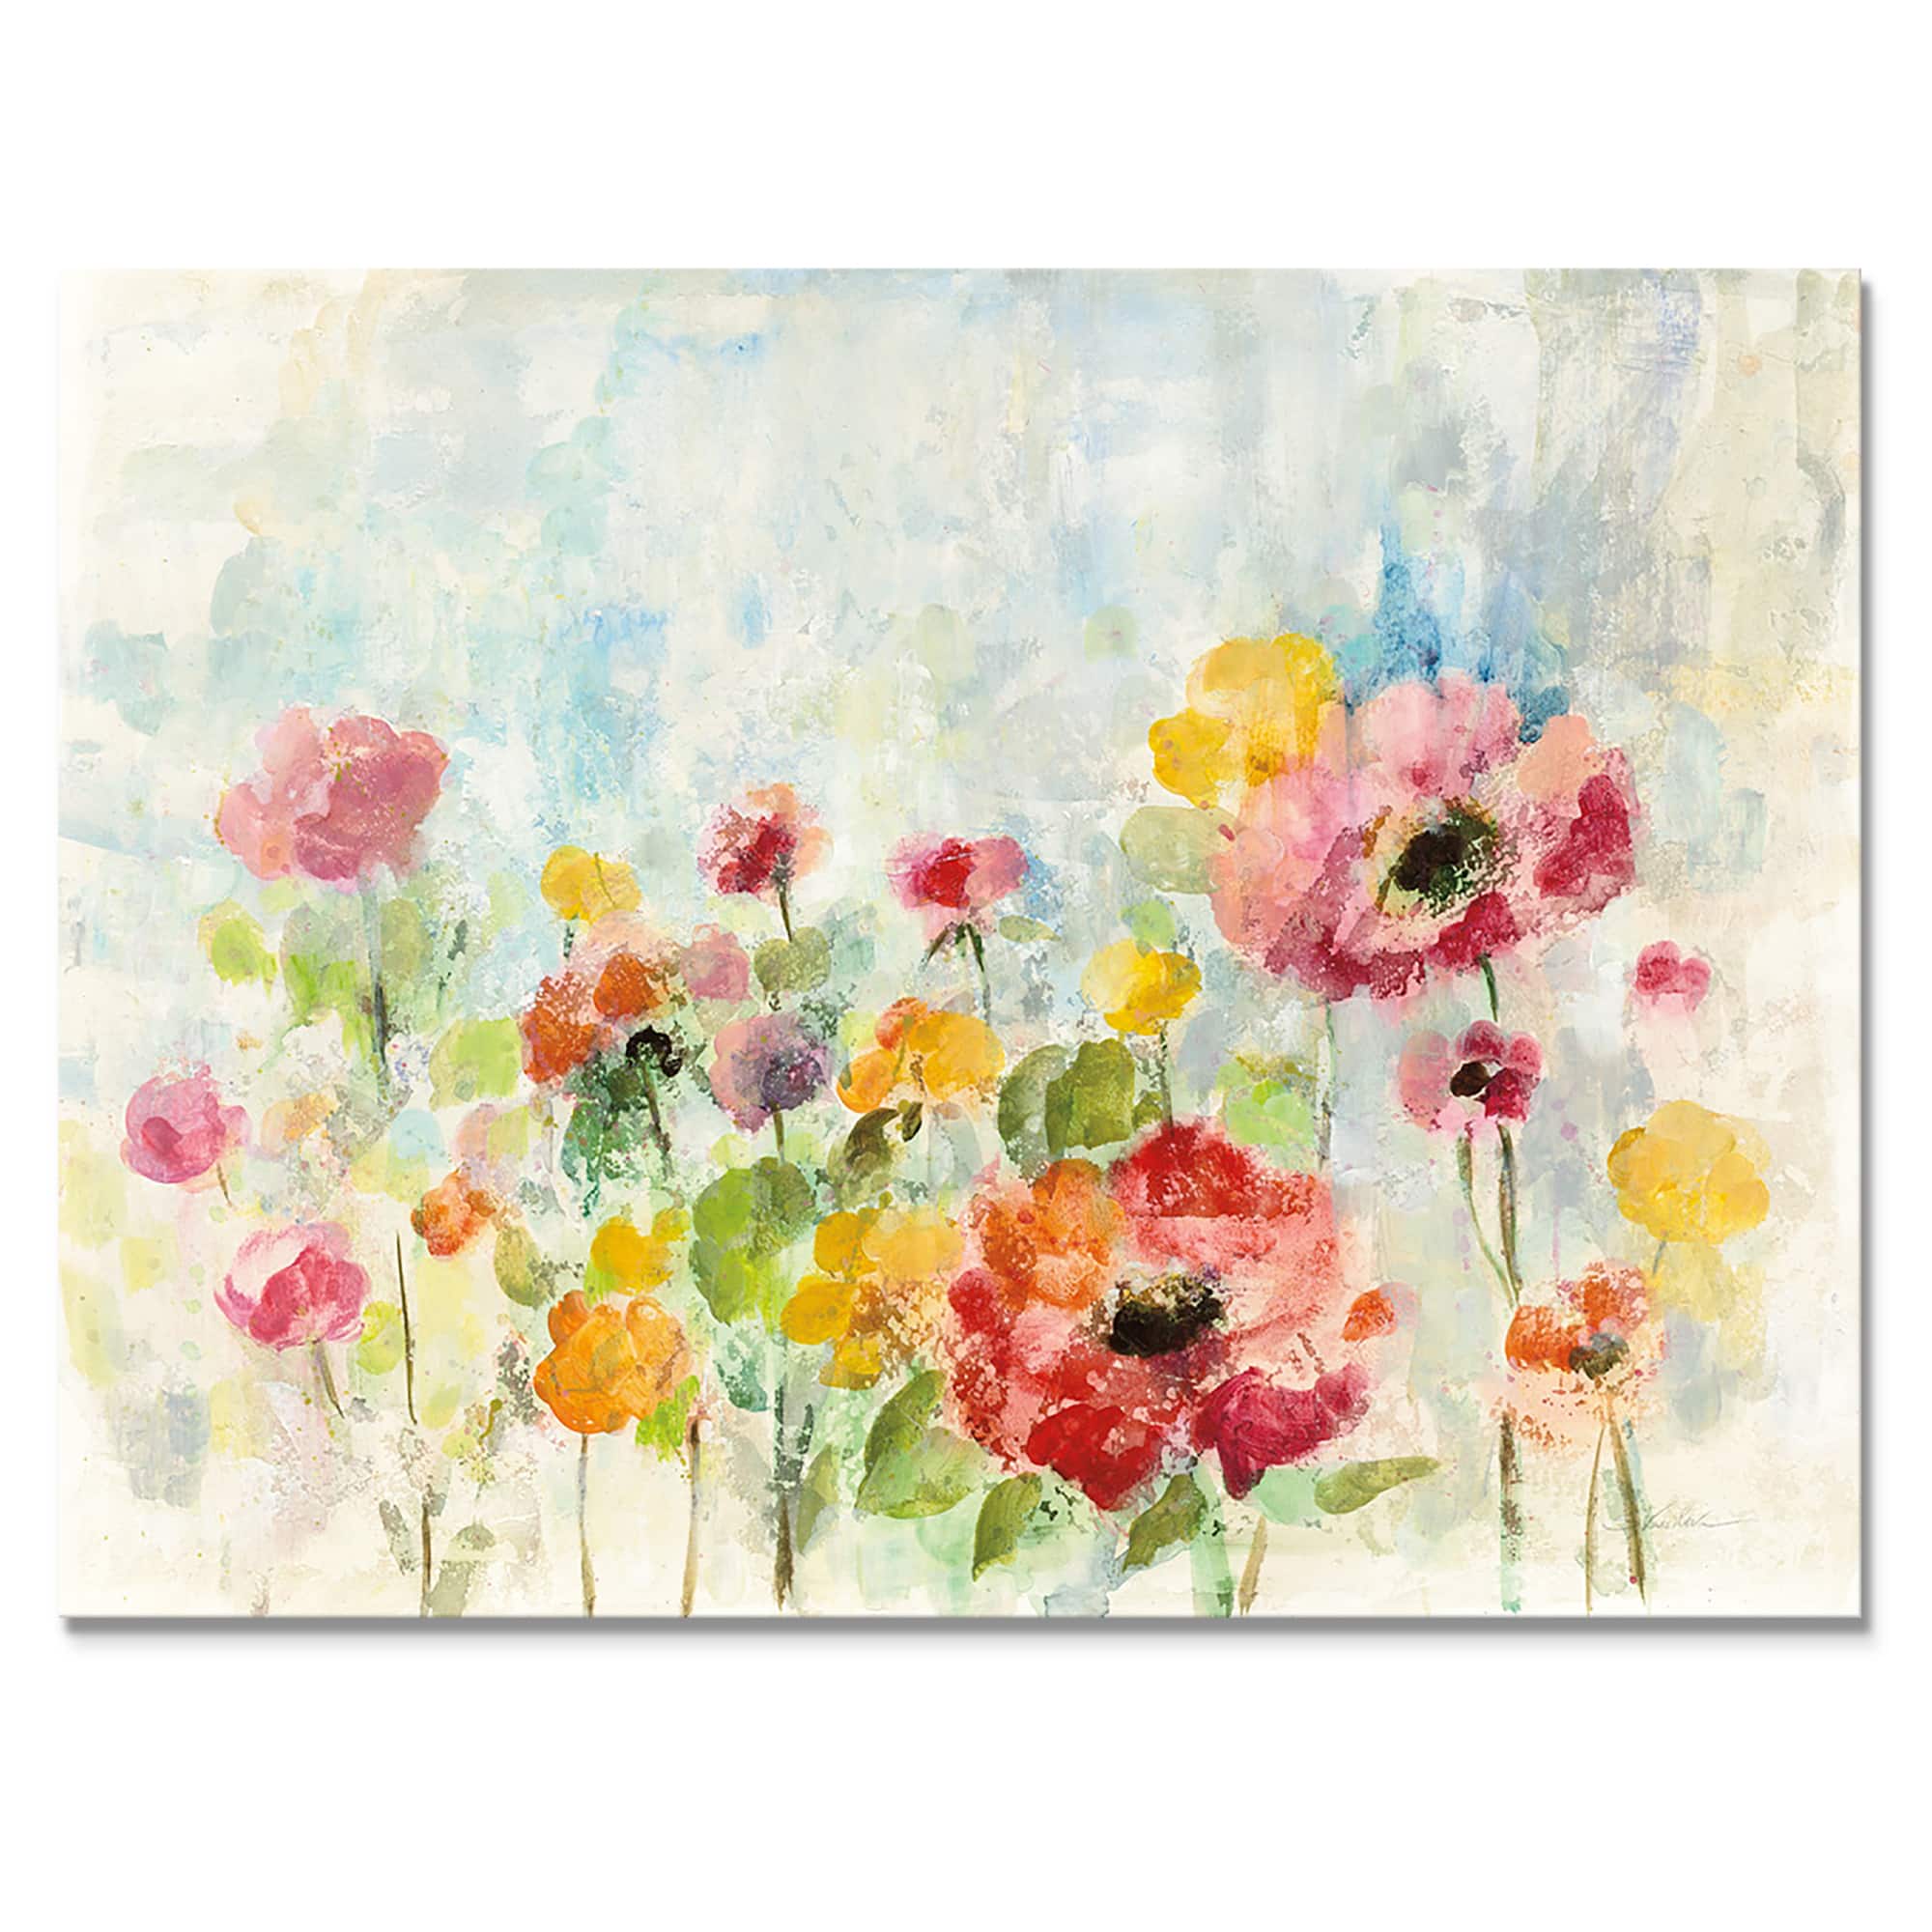  Designart - Summer Rain Floral - Cottage Canvas Wall Art